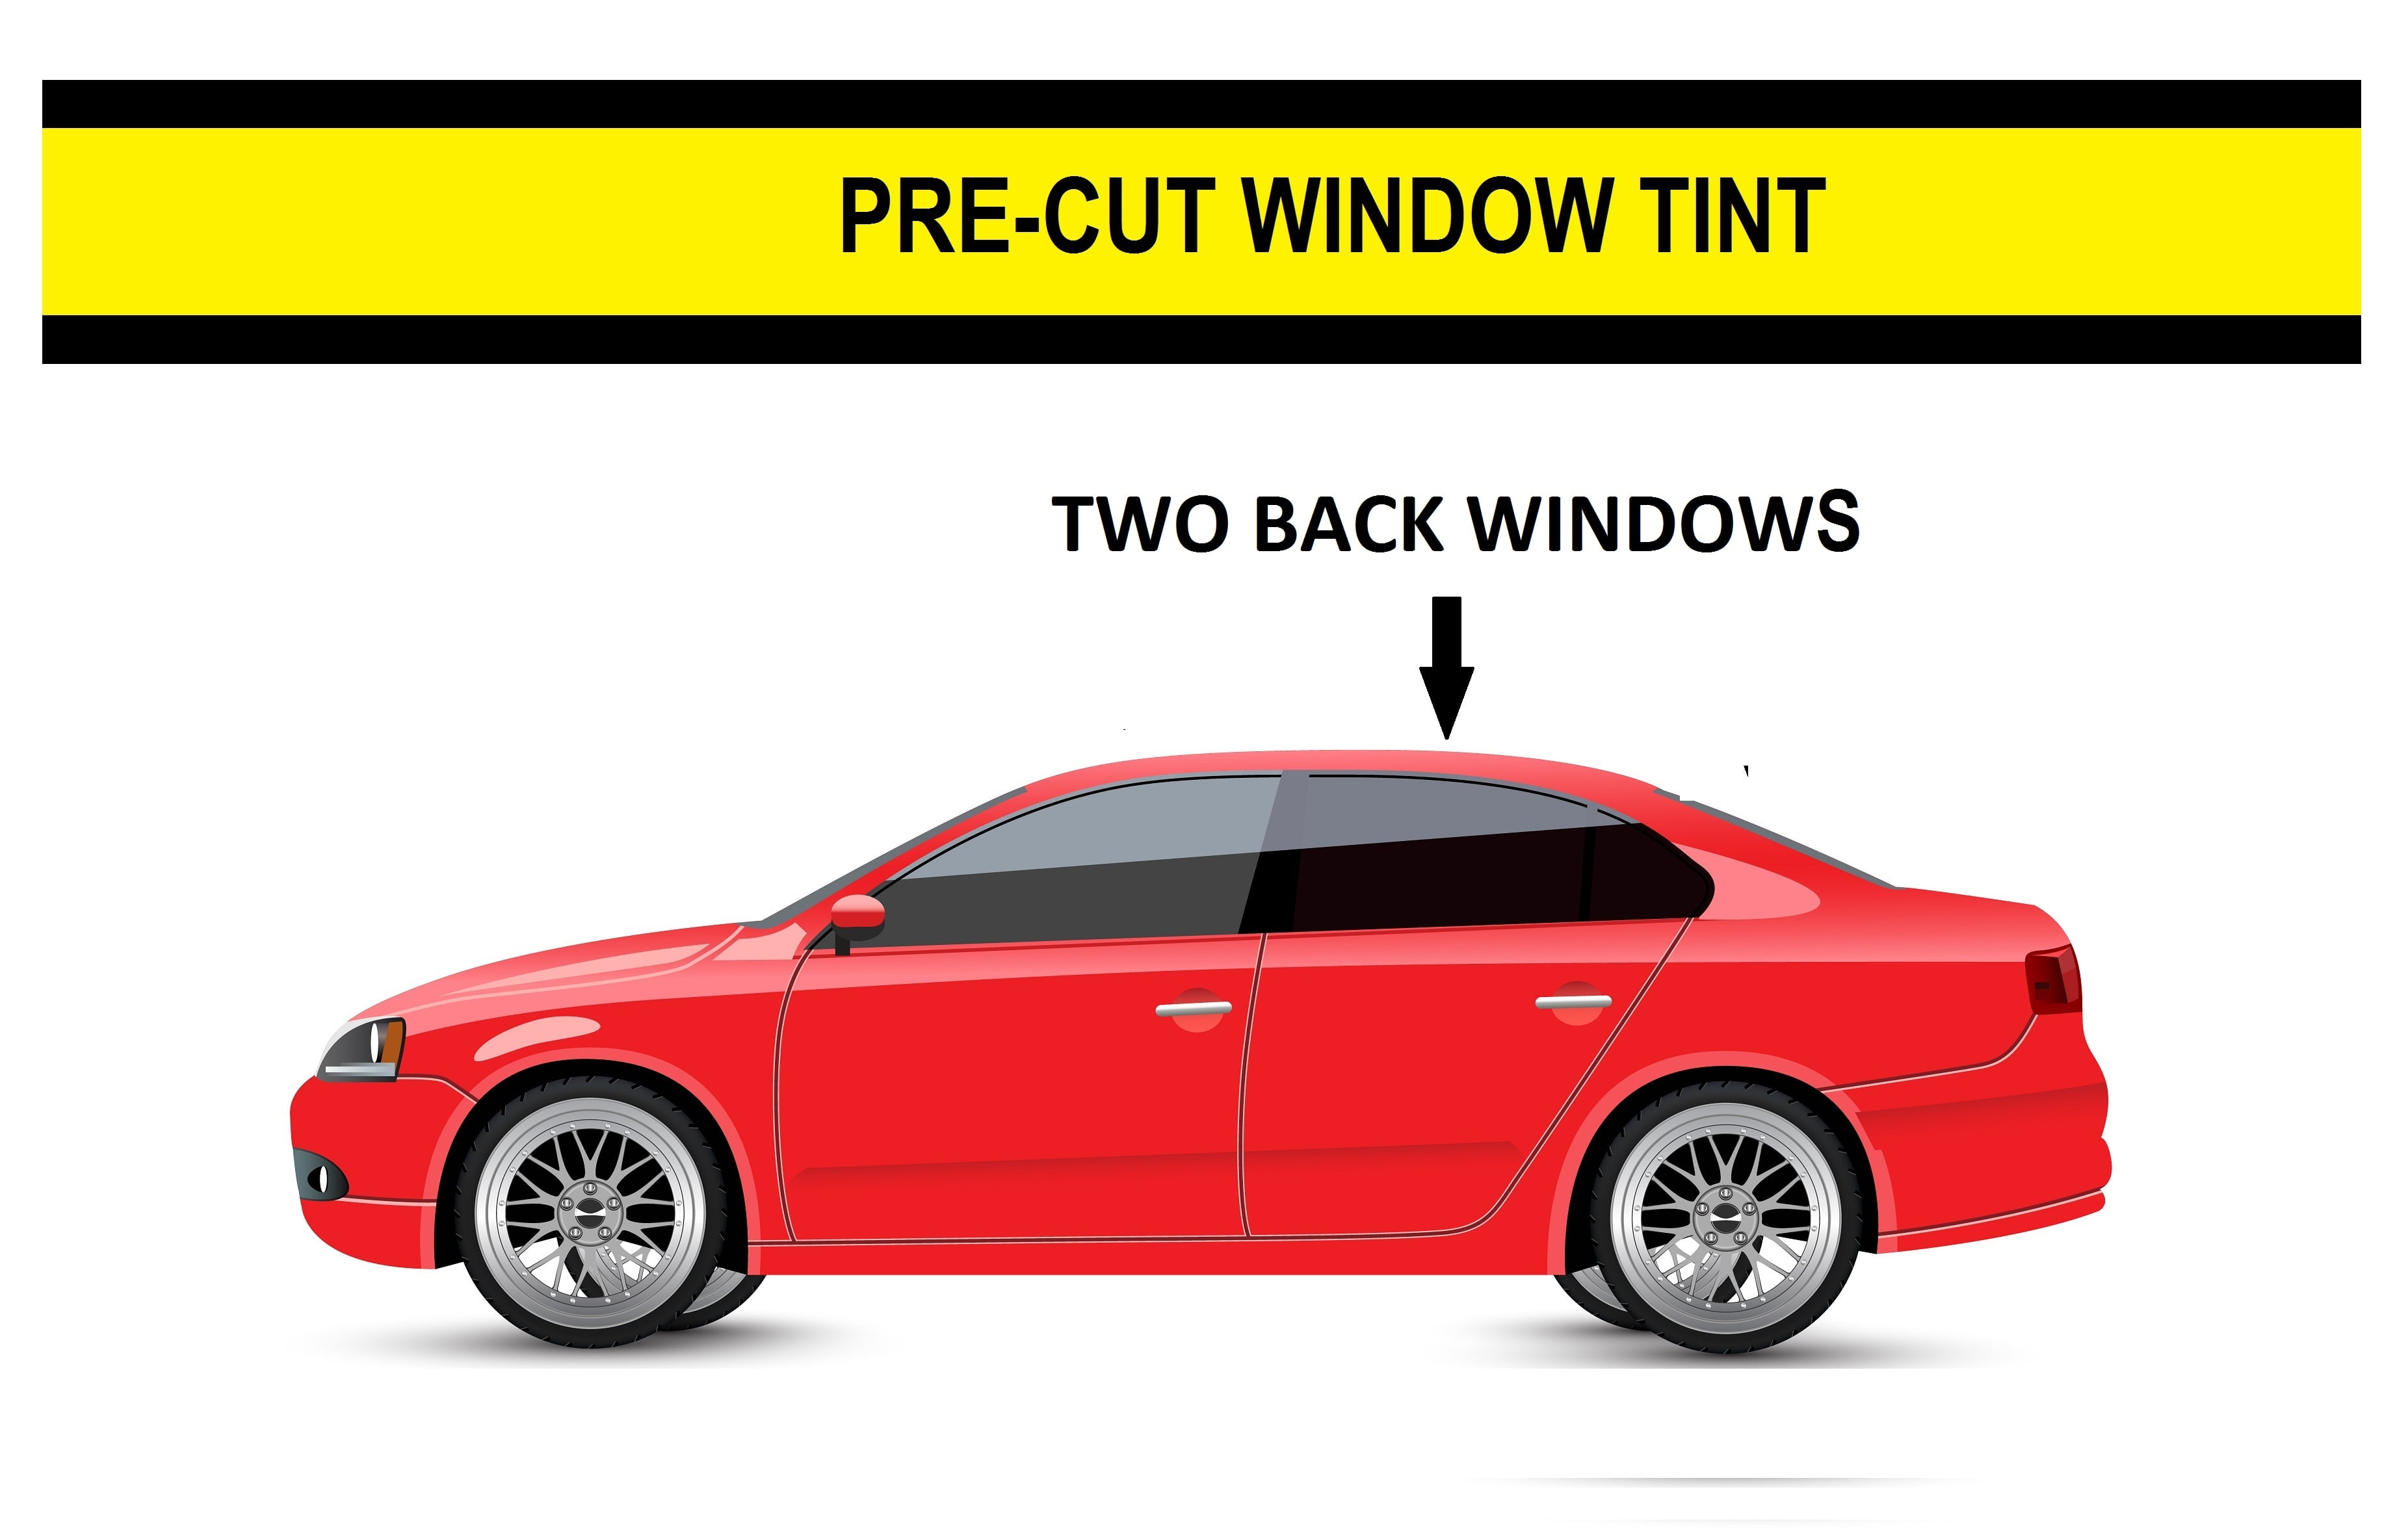 PreCut Window Film for Cadillac Escalade 2003-2006 Any Tint Shade VLT AUTO 